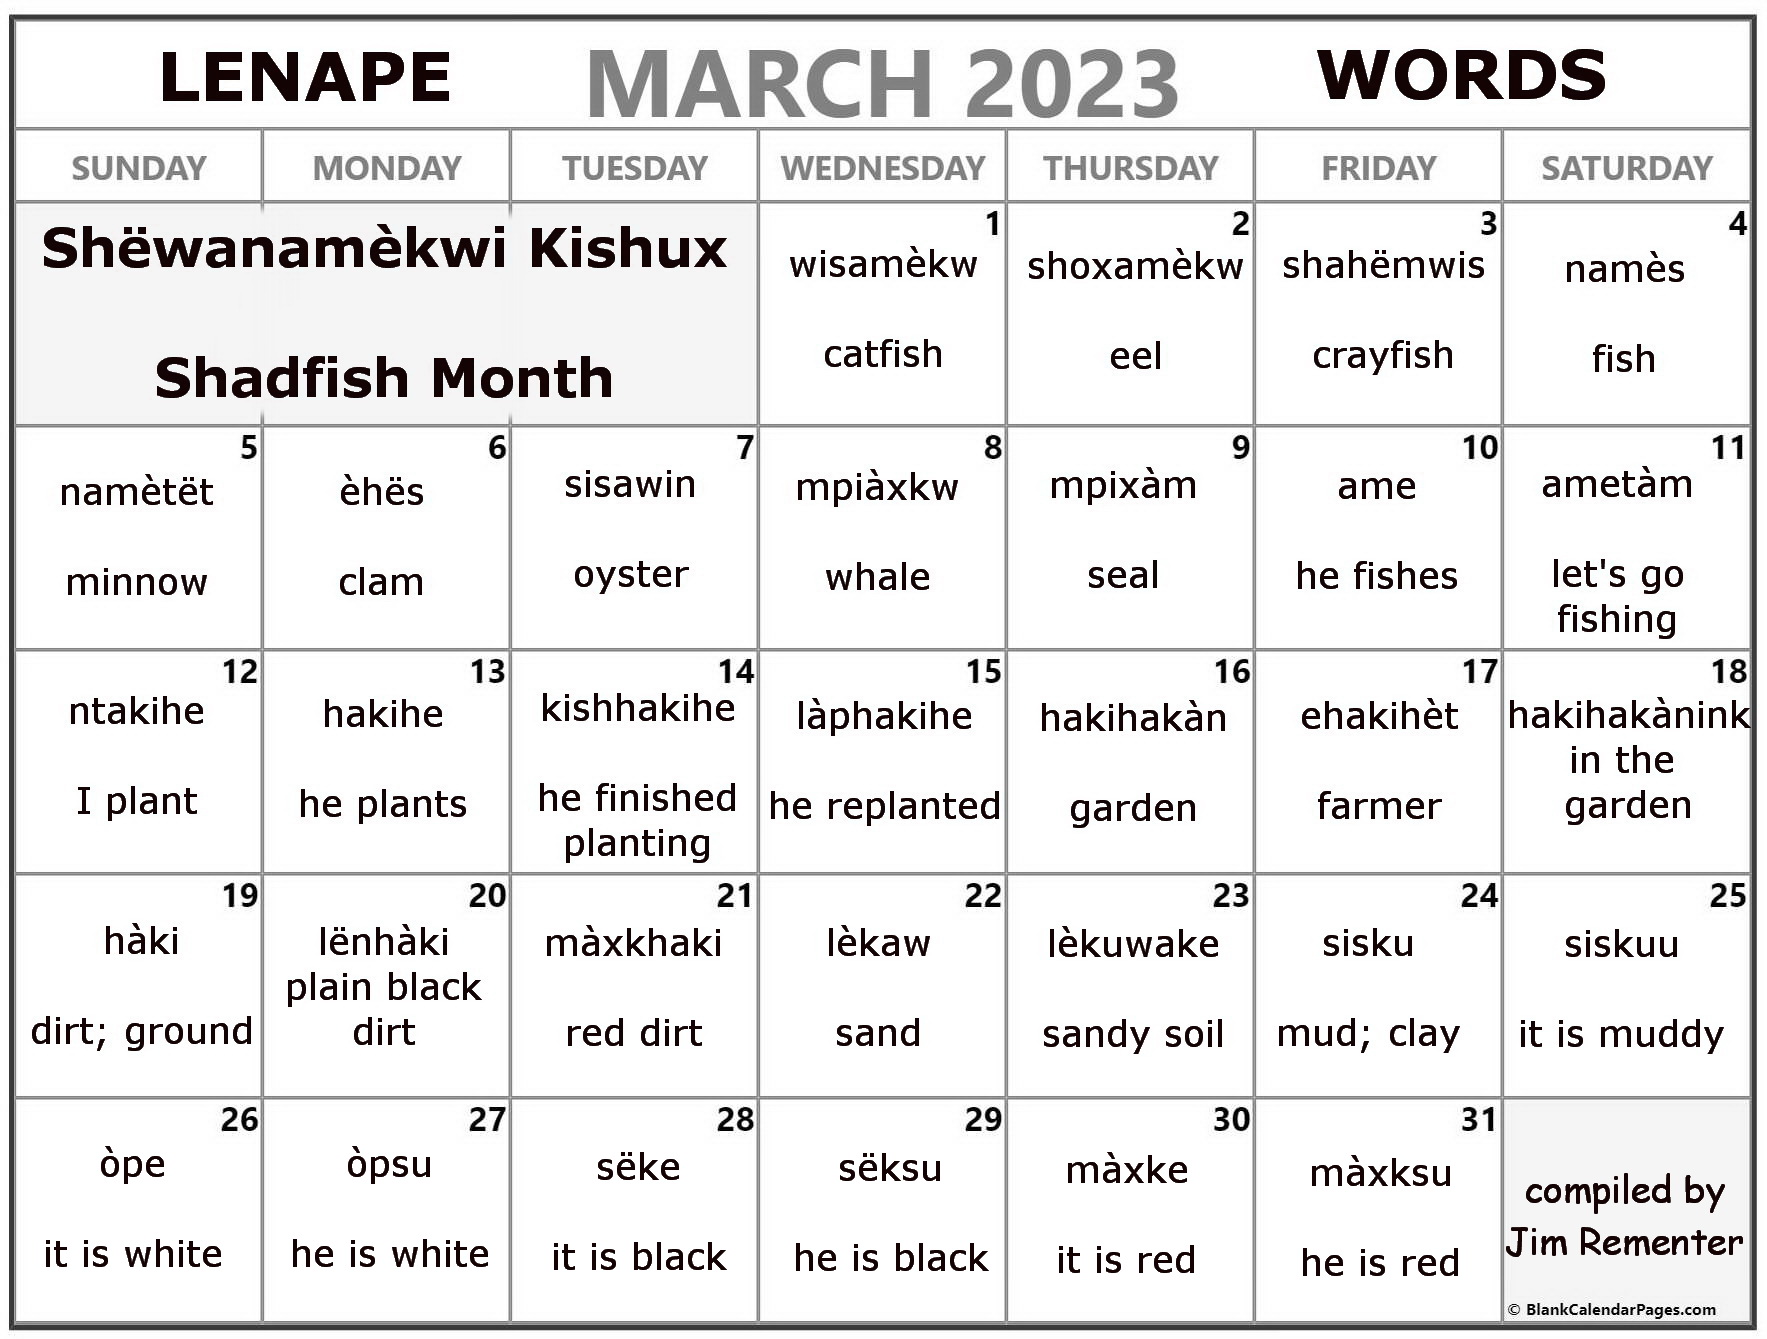 March 2023 Lenape Word-a-Day Calendar